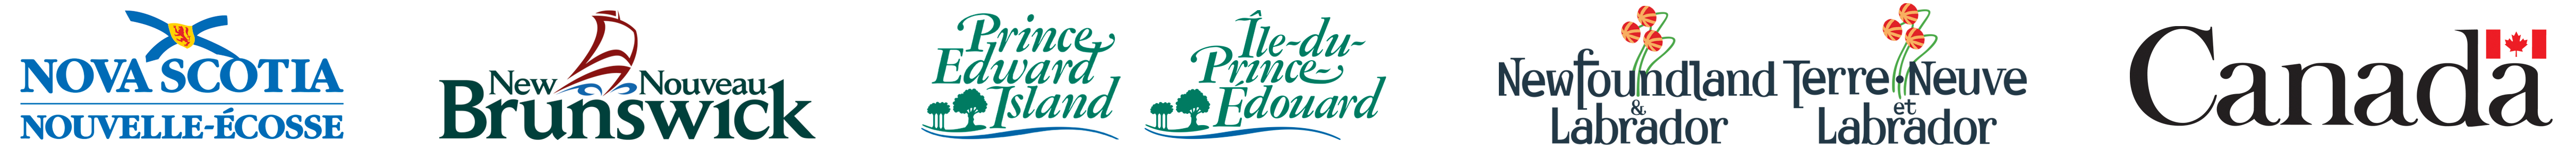 Canada_Atlantic_Provinces_Logos